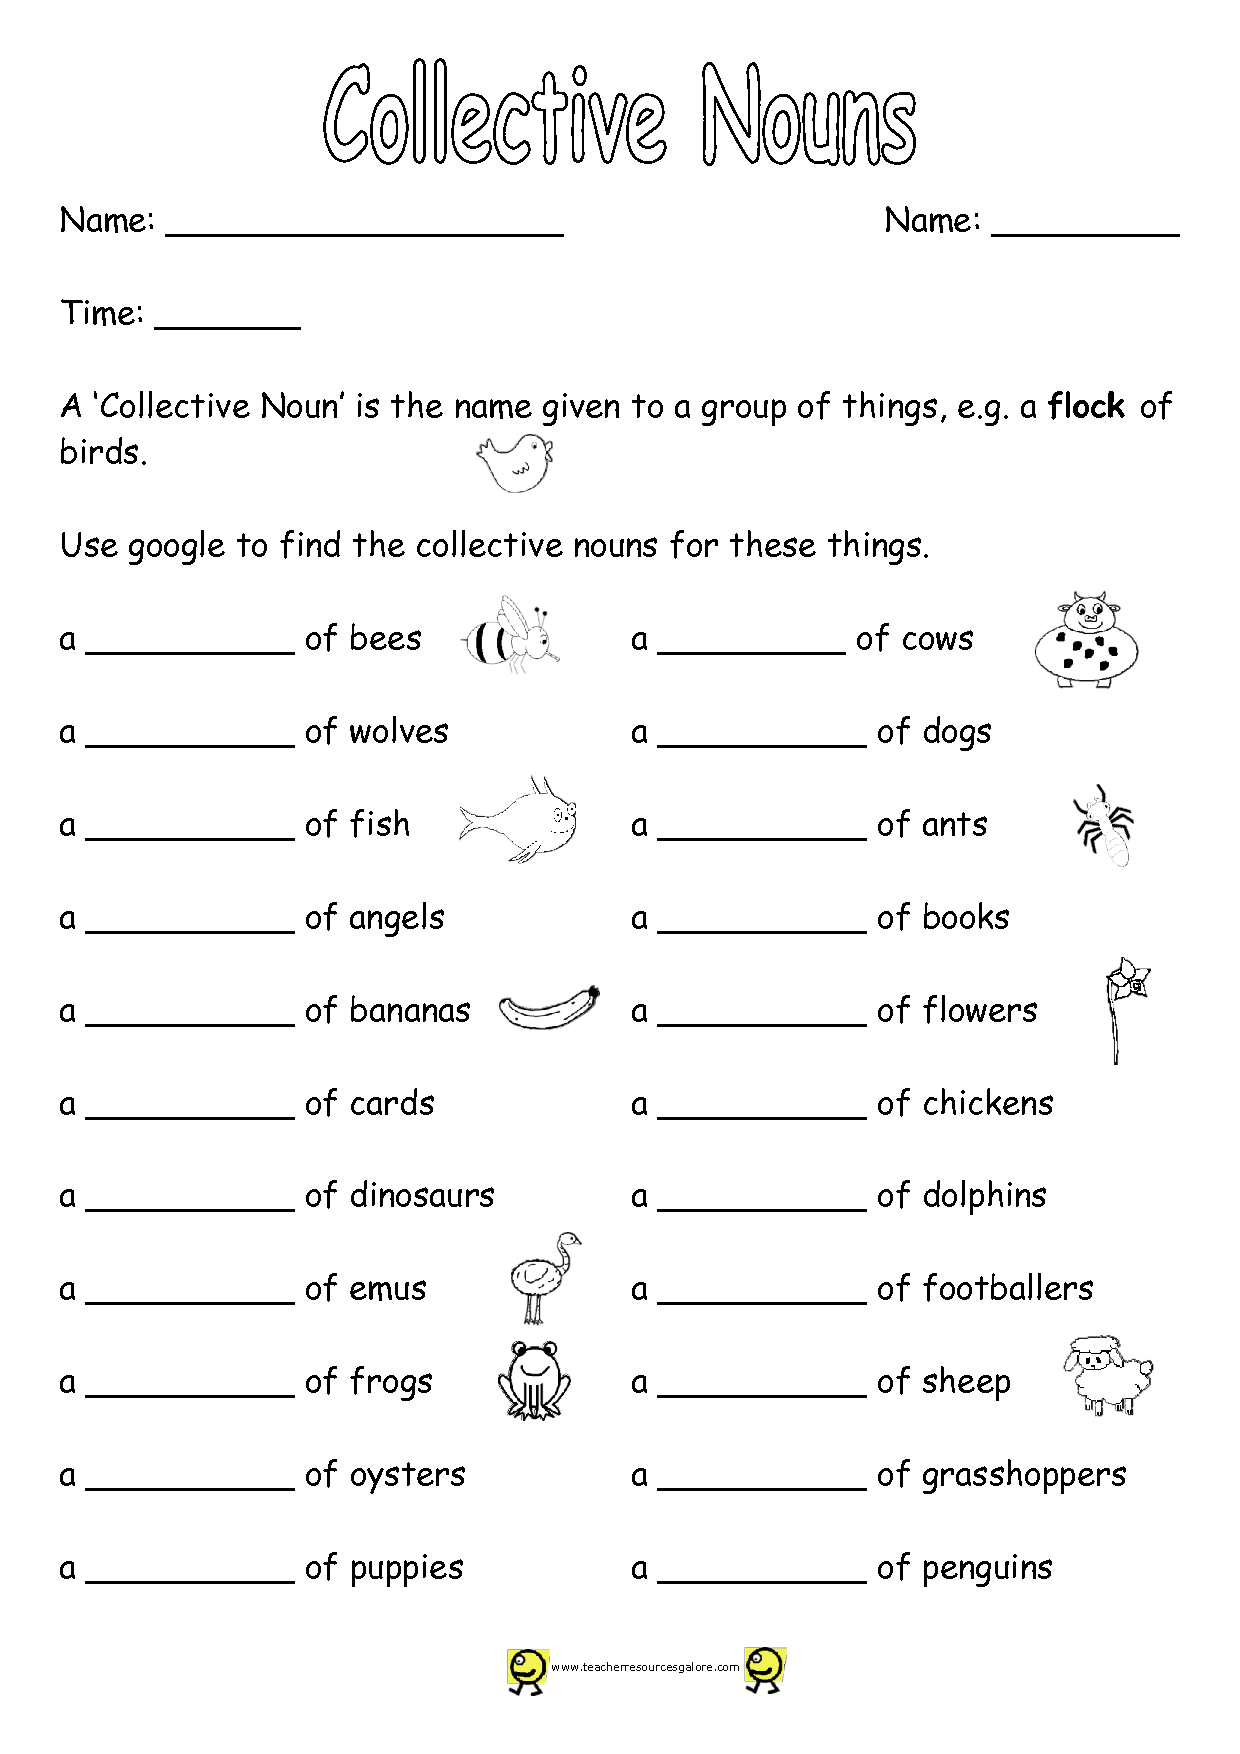 english-collective-nouns-worksheet-5-grade-2-estudynotes